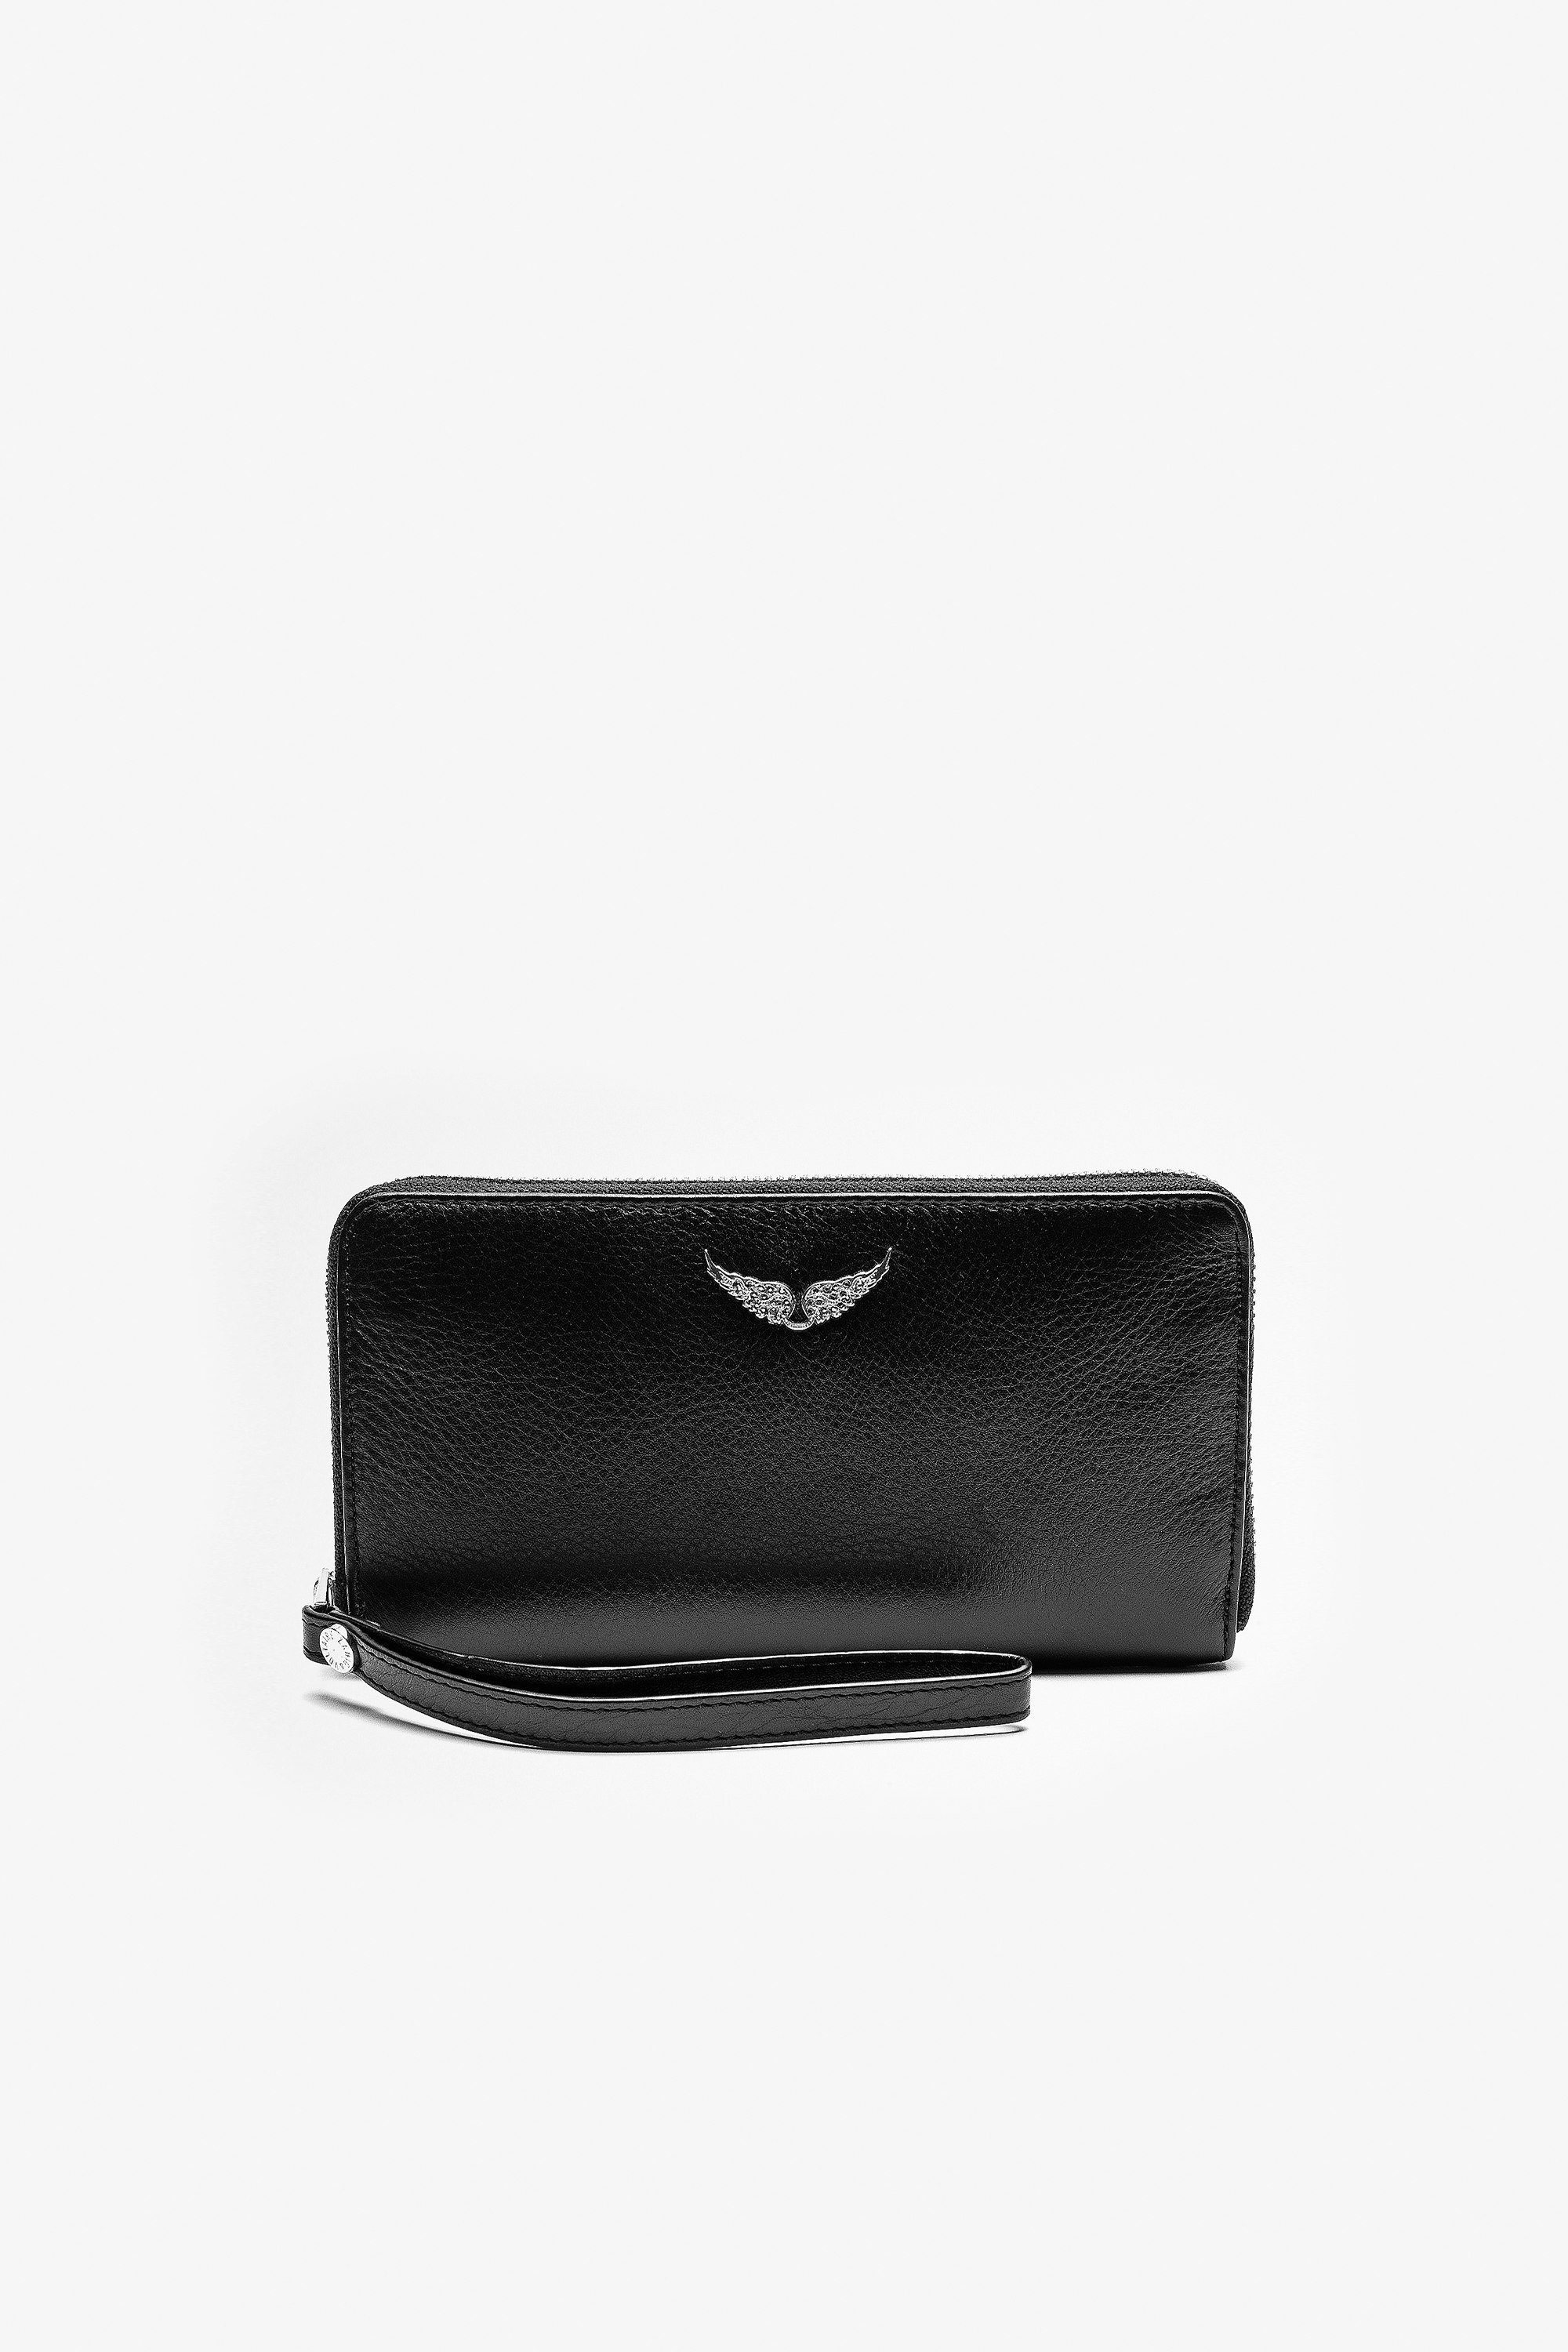 Compagnon Wallet - Women’s black leather wallet.